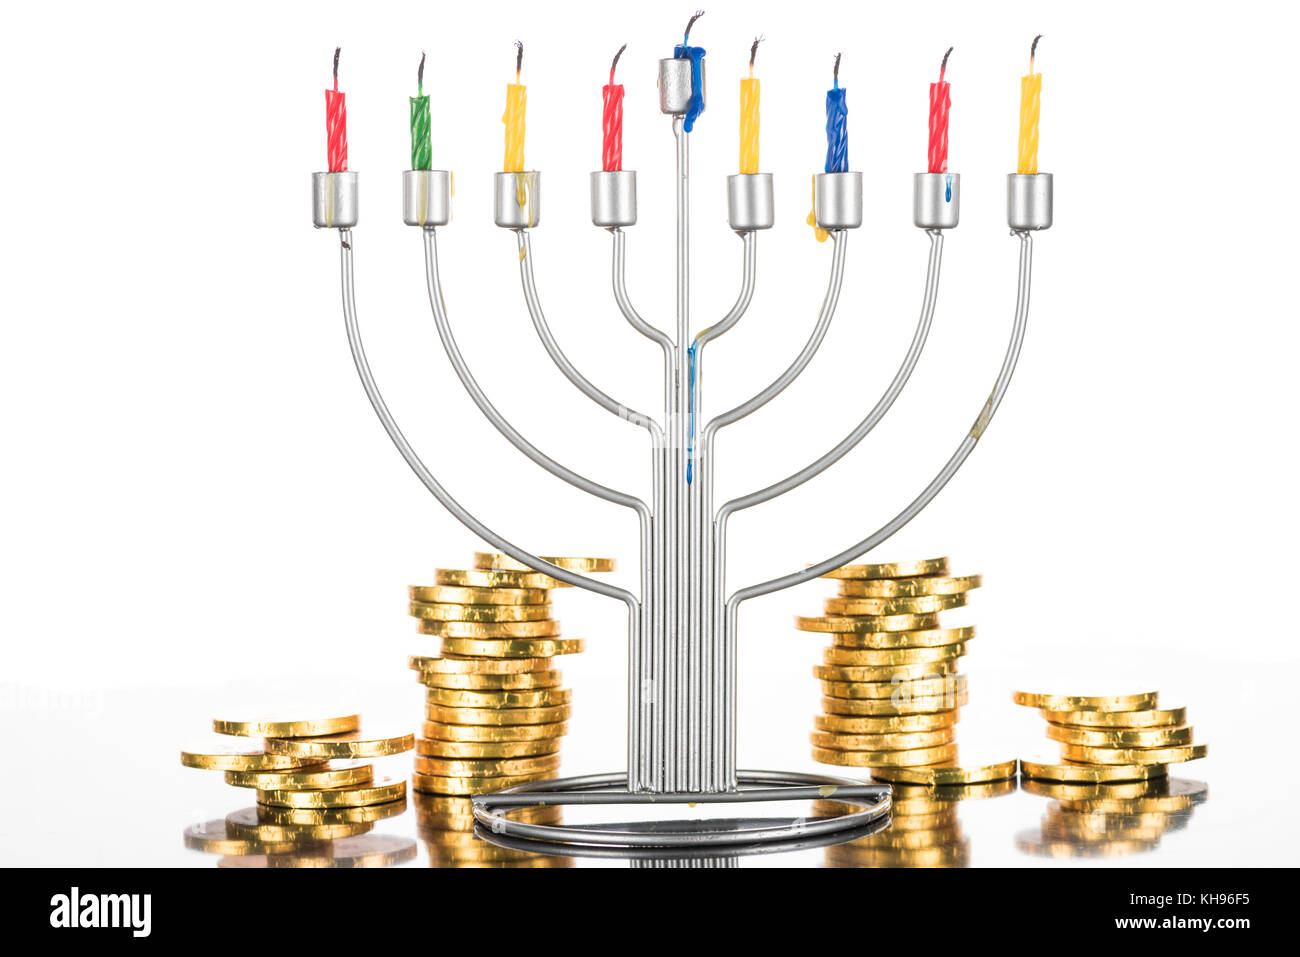 hanukkah celebration with menorah Stock Photo